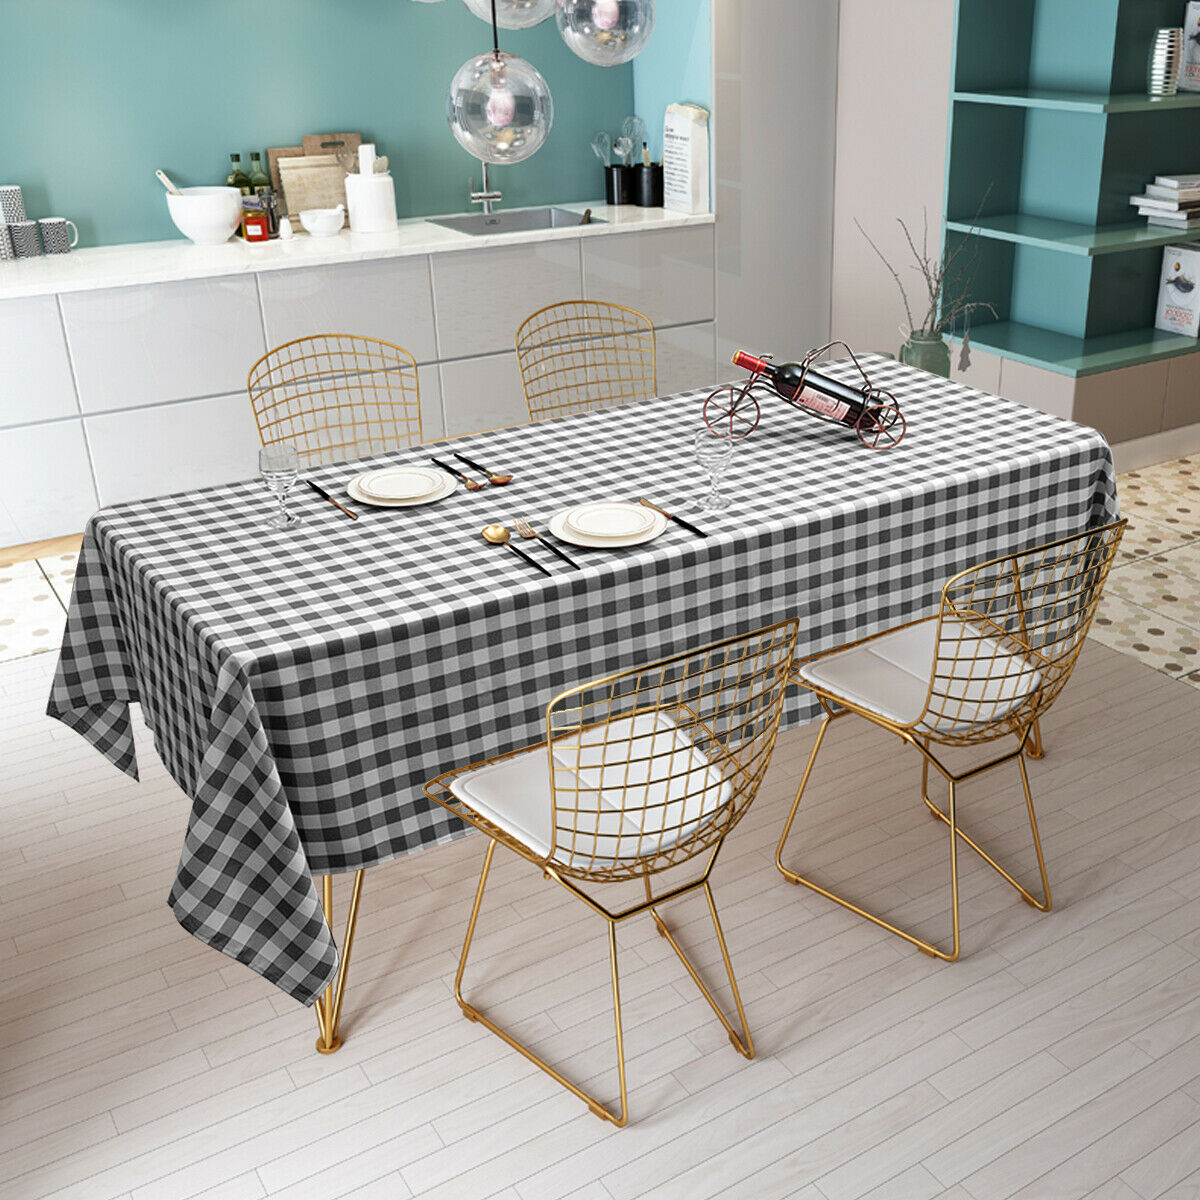 10Pcs 60x126 Rectangular Polyester Tablecloth Black & White Checker Party